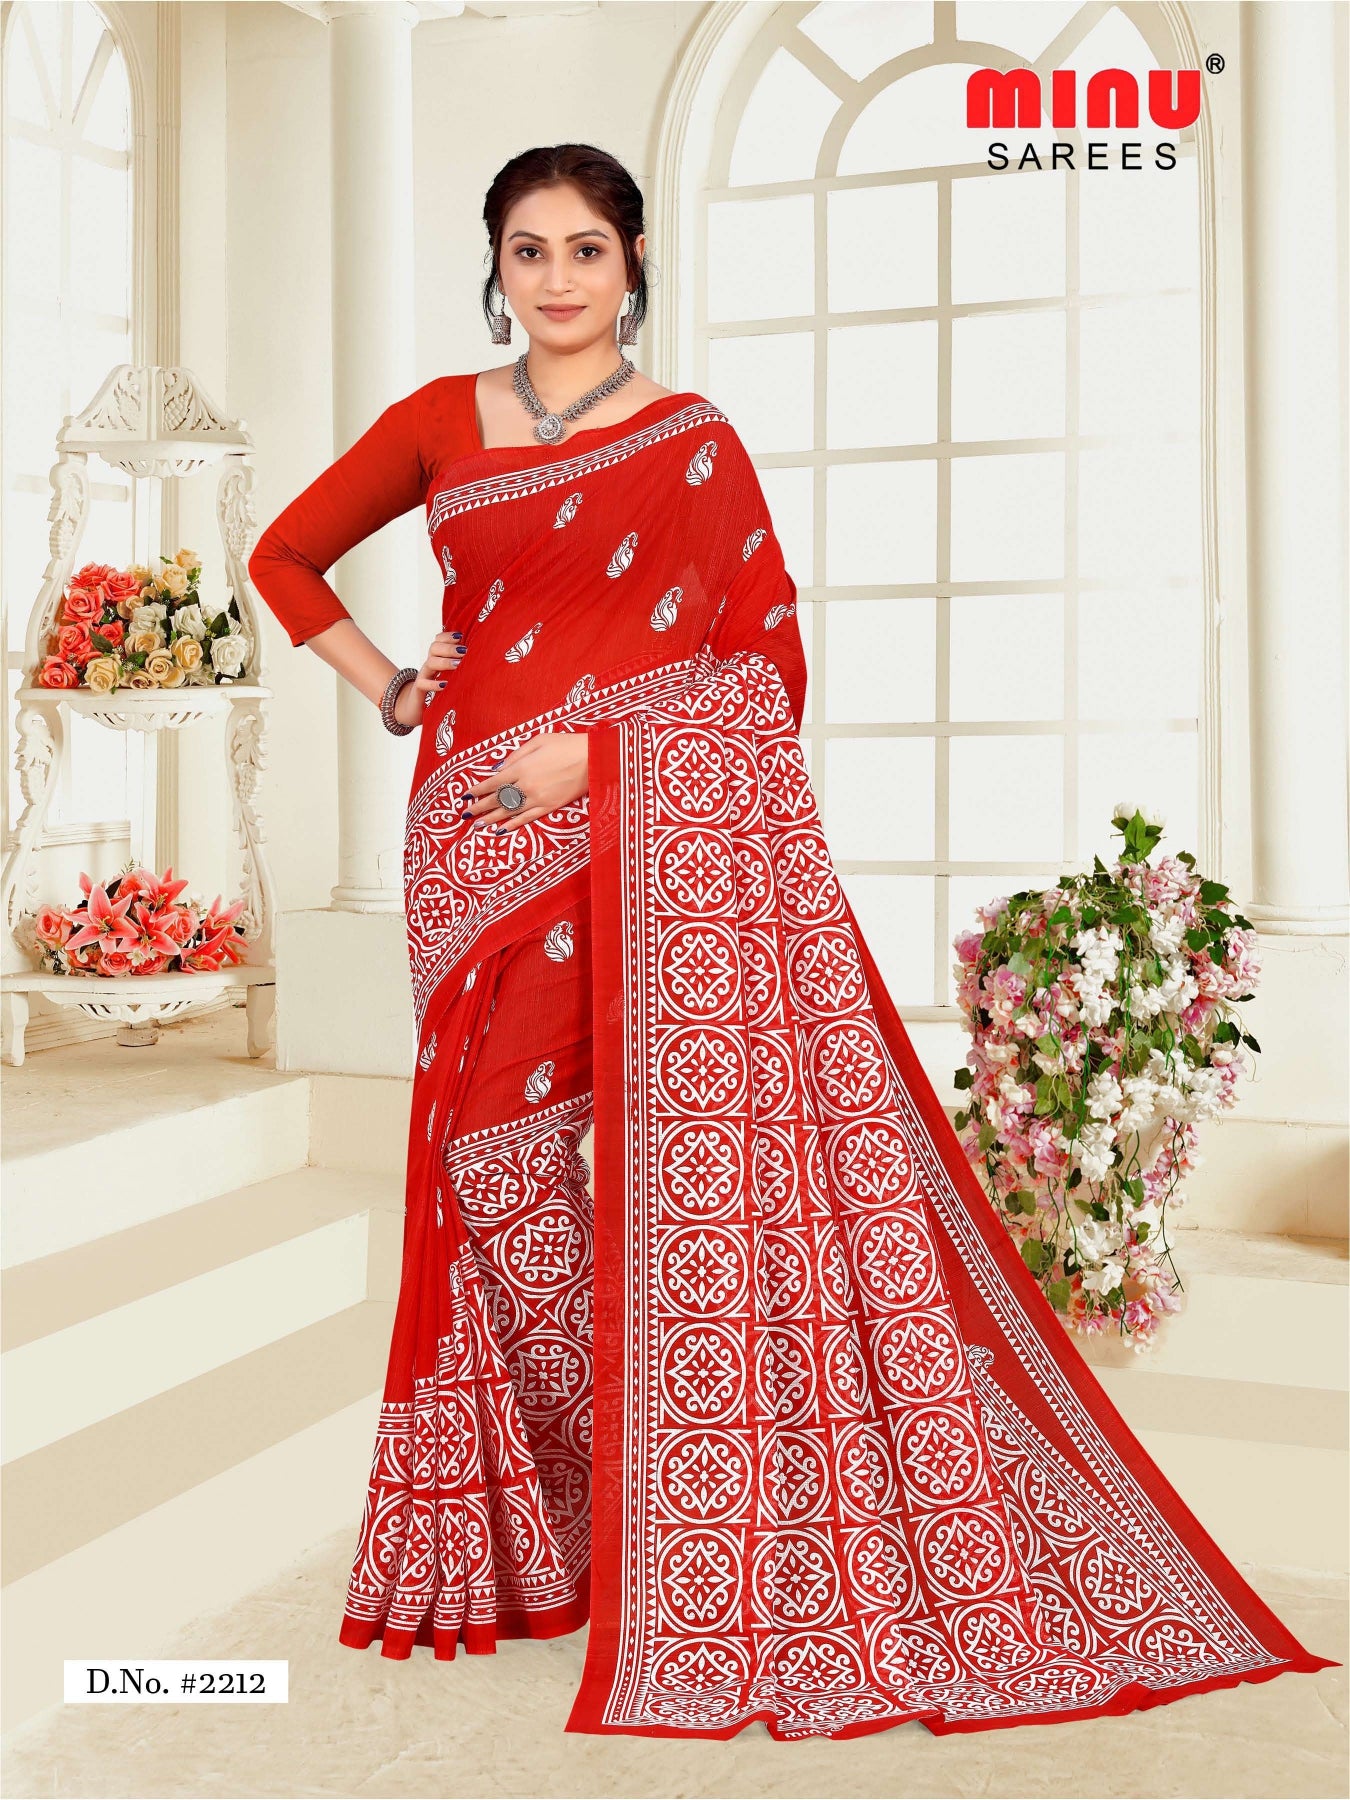 Online image of designer printed sarees